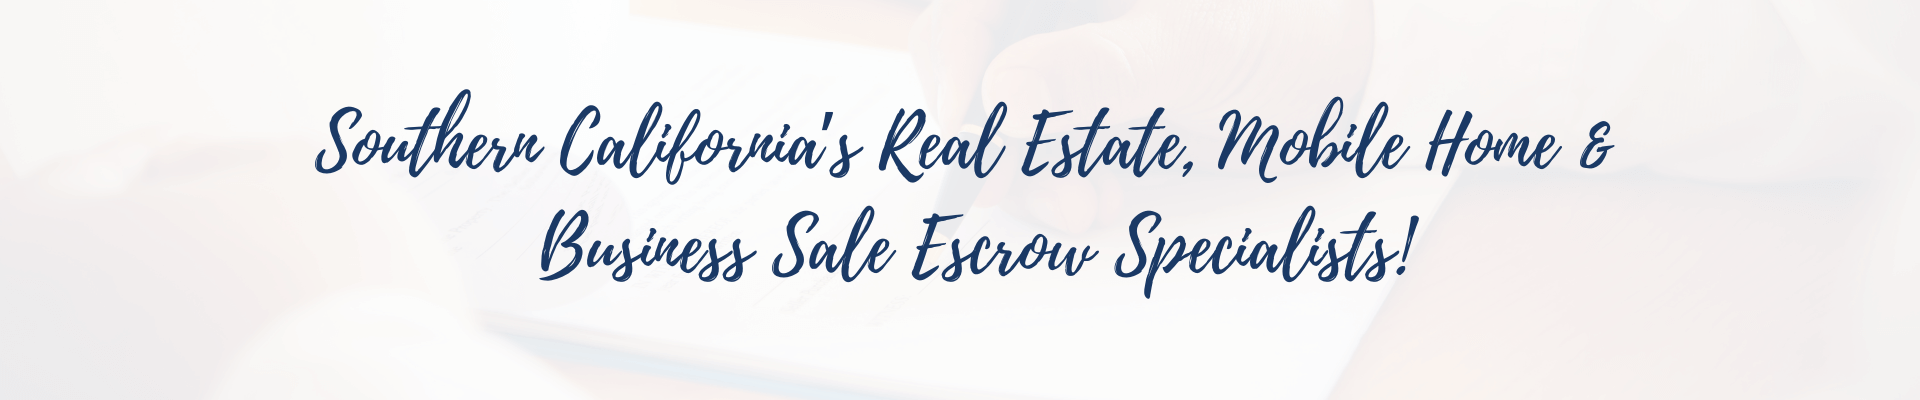 IE Escrow So Cal Real Estate Mobile Home Business Sale Escrow Specialists